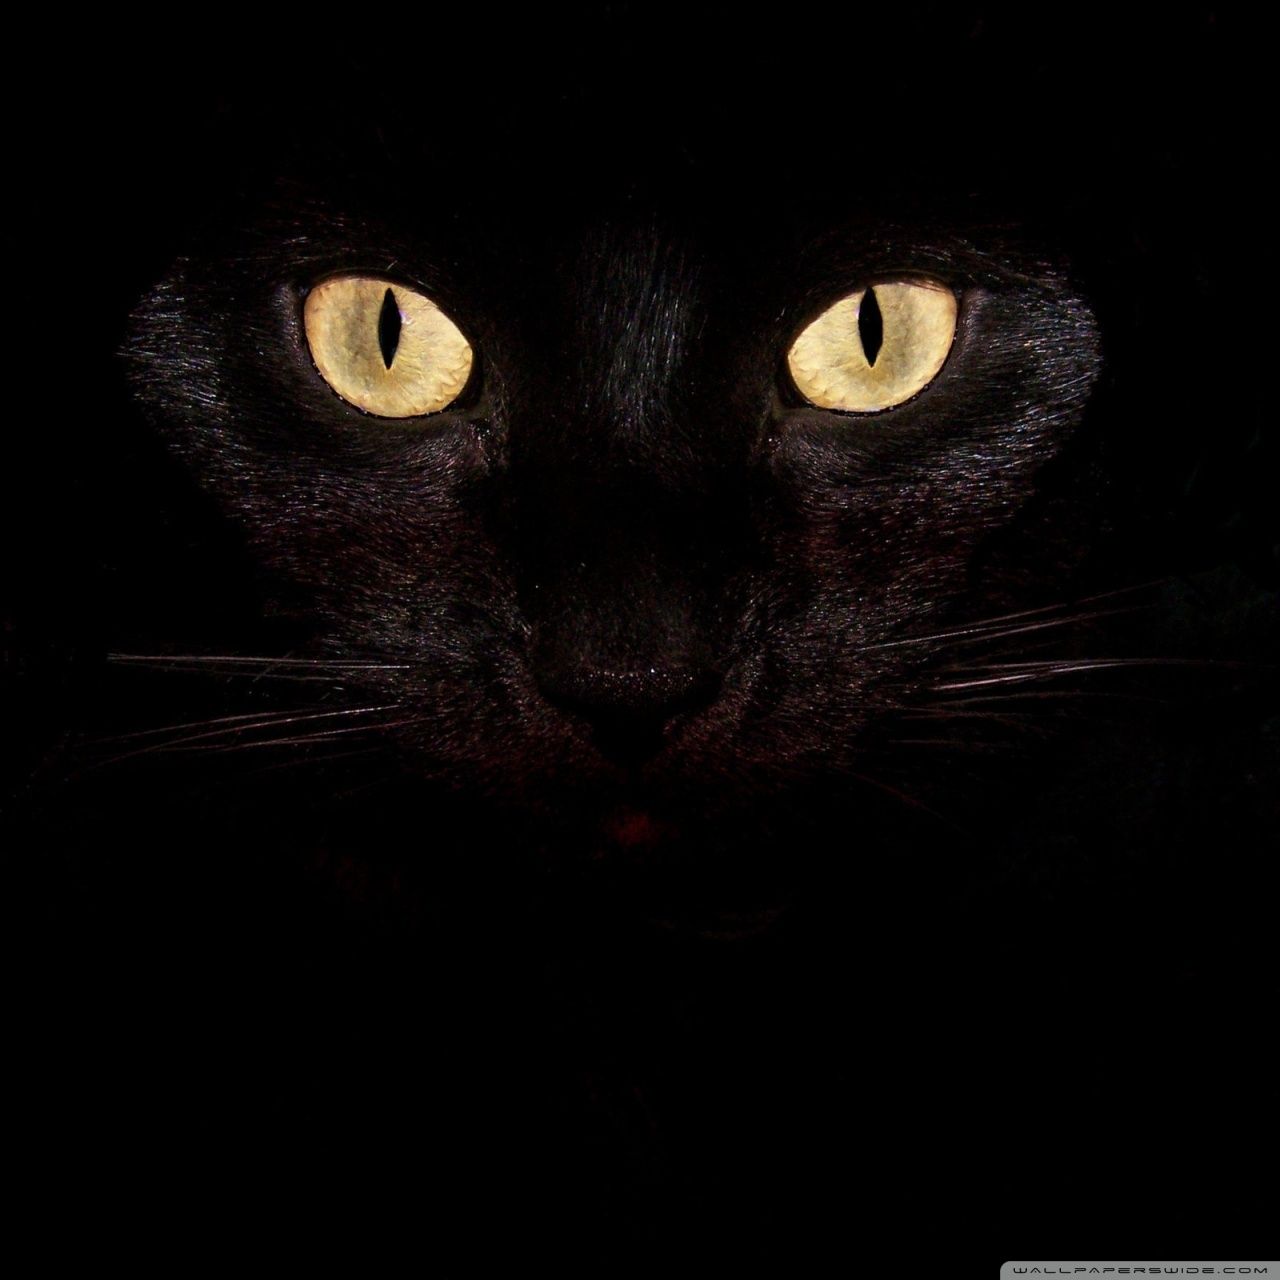 Black Cat Wallpaper Flash Sales - www.puzzlewood.net 1696136094